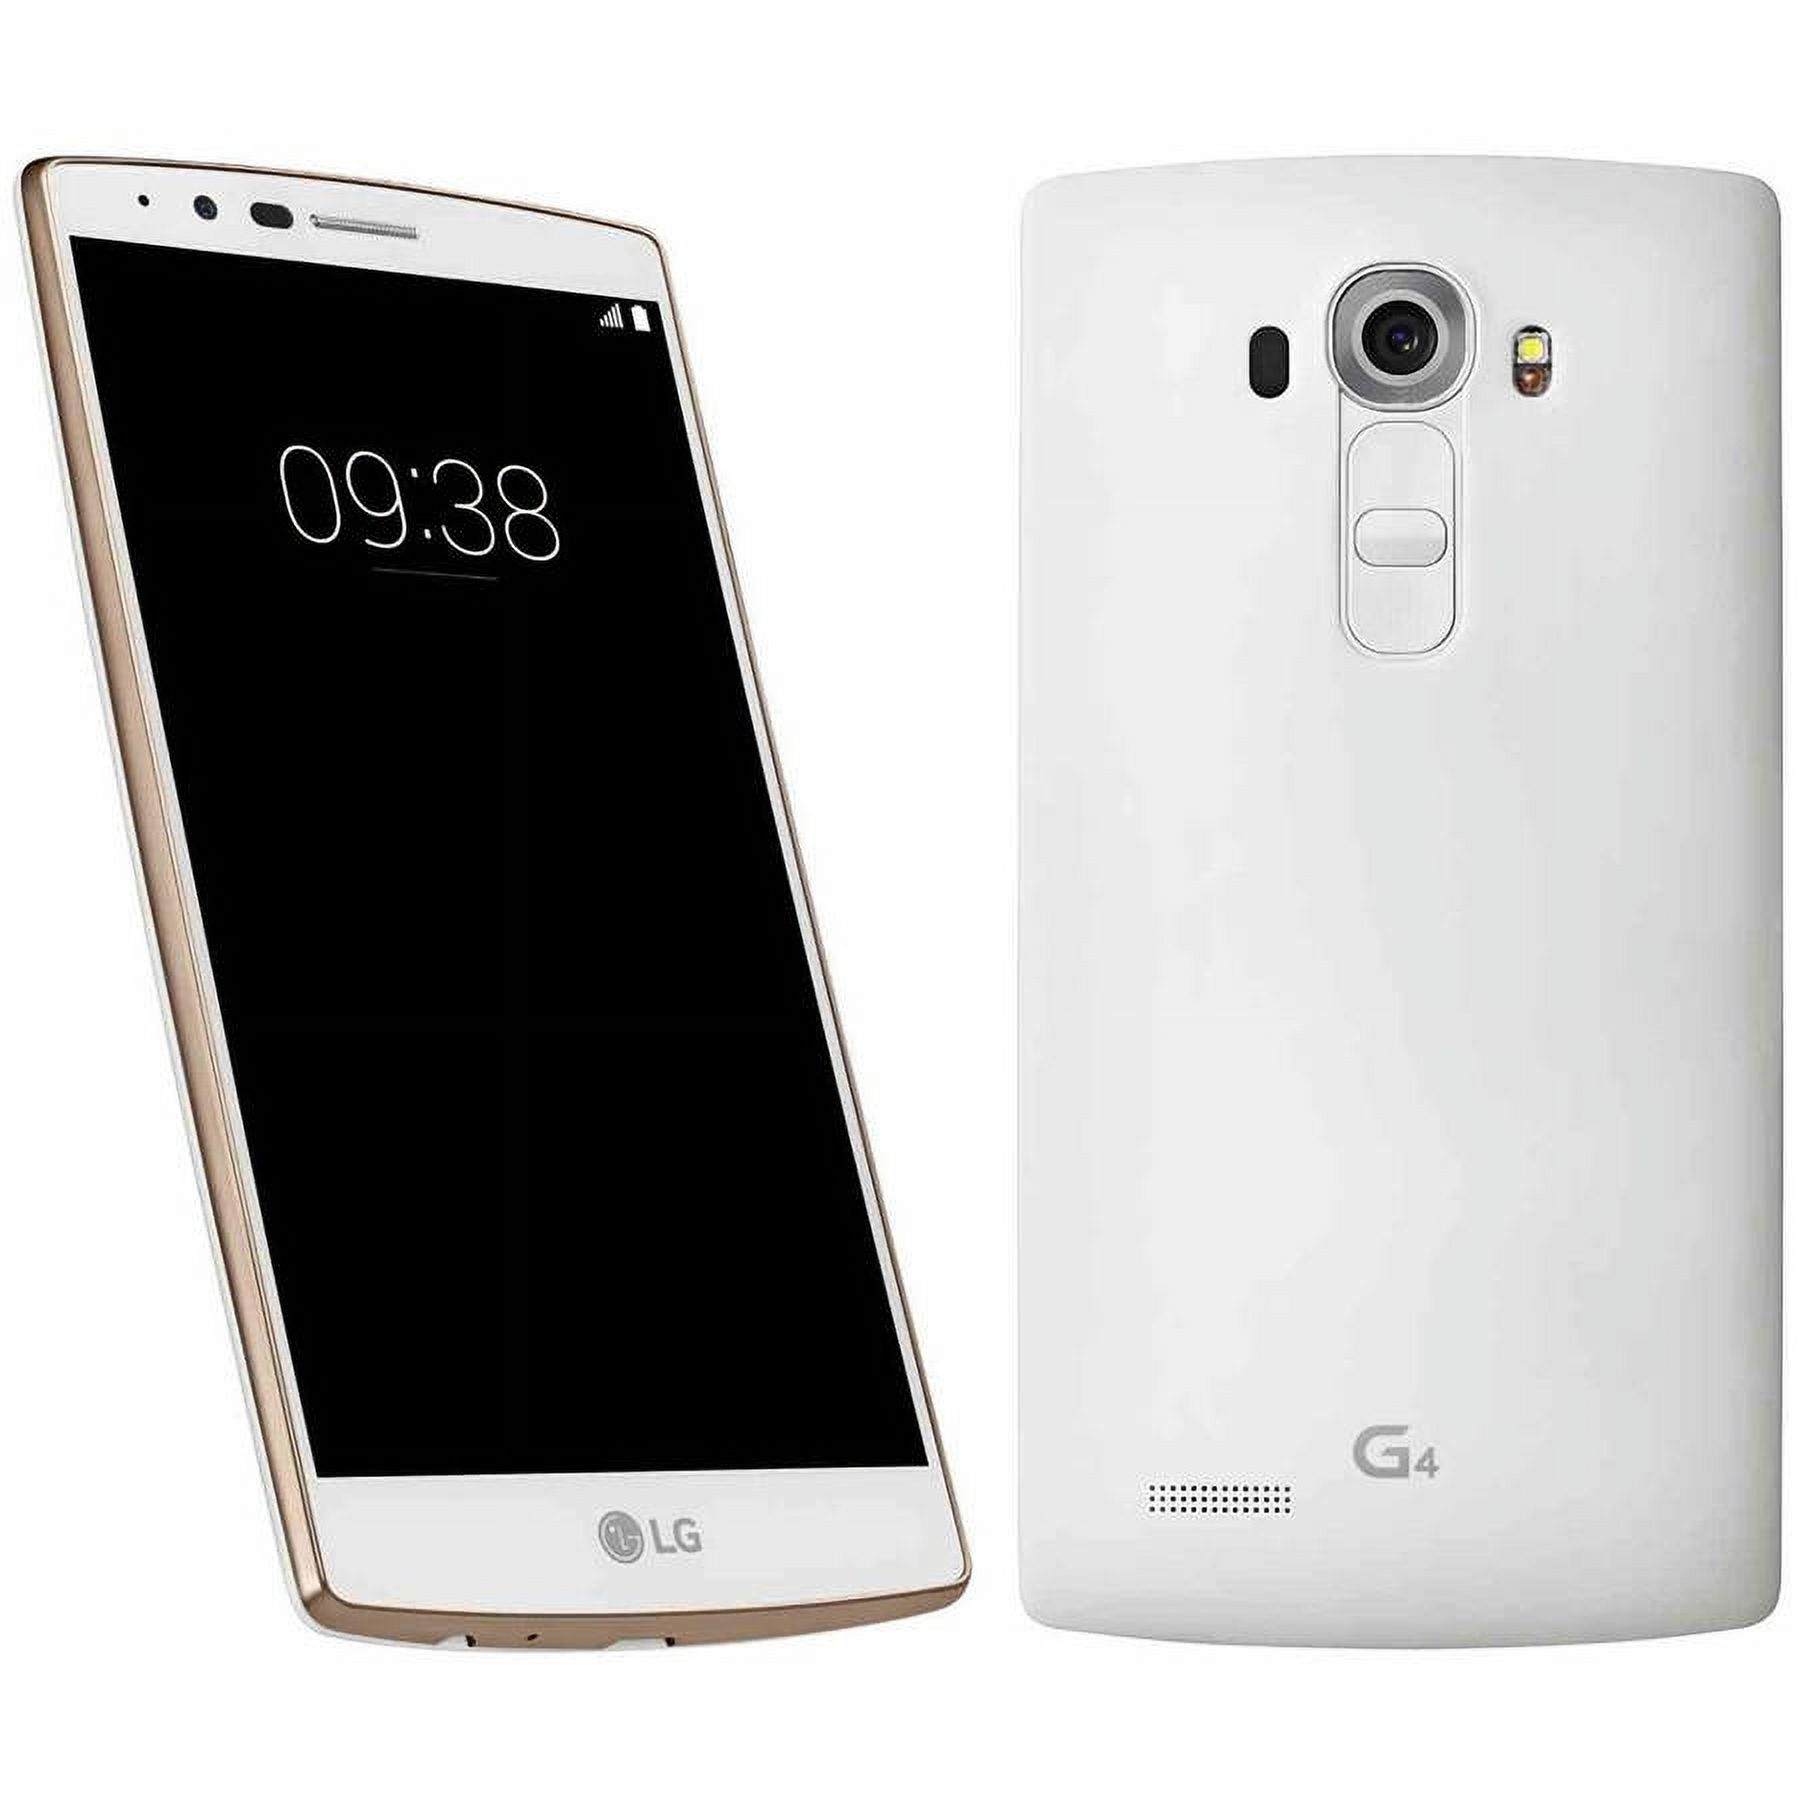 LG G4 H815 32GB GSM Smartphone (Unlocked), White/Gold - image 3 of 3